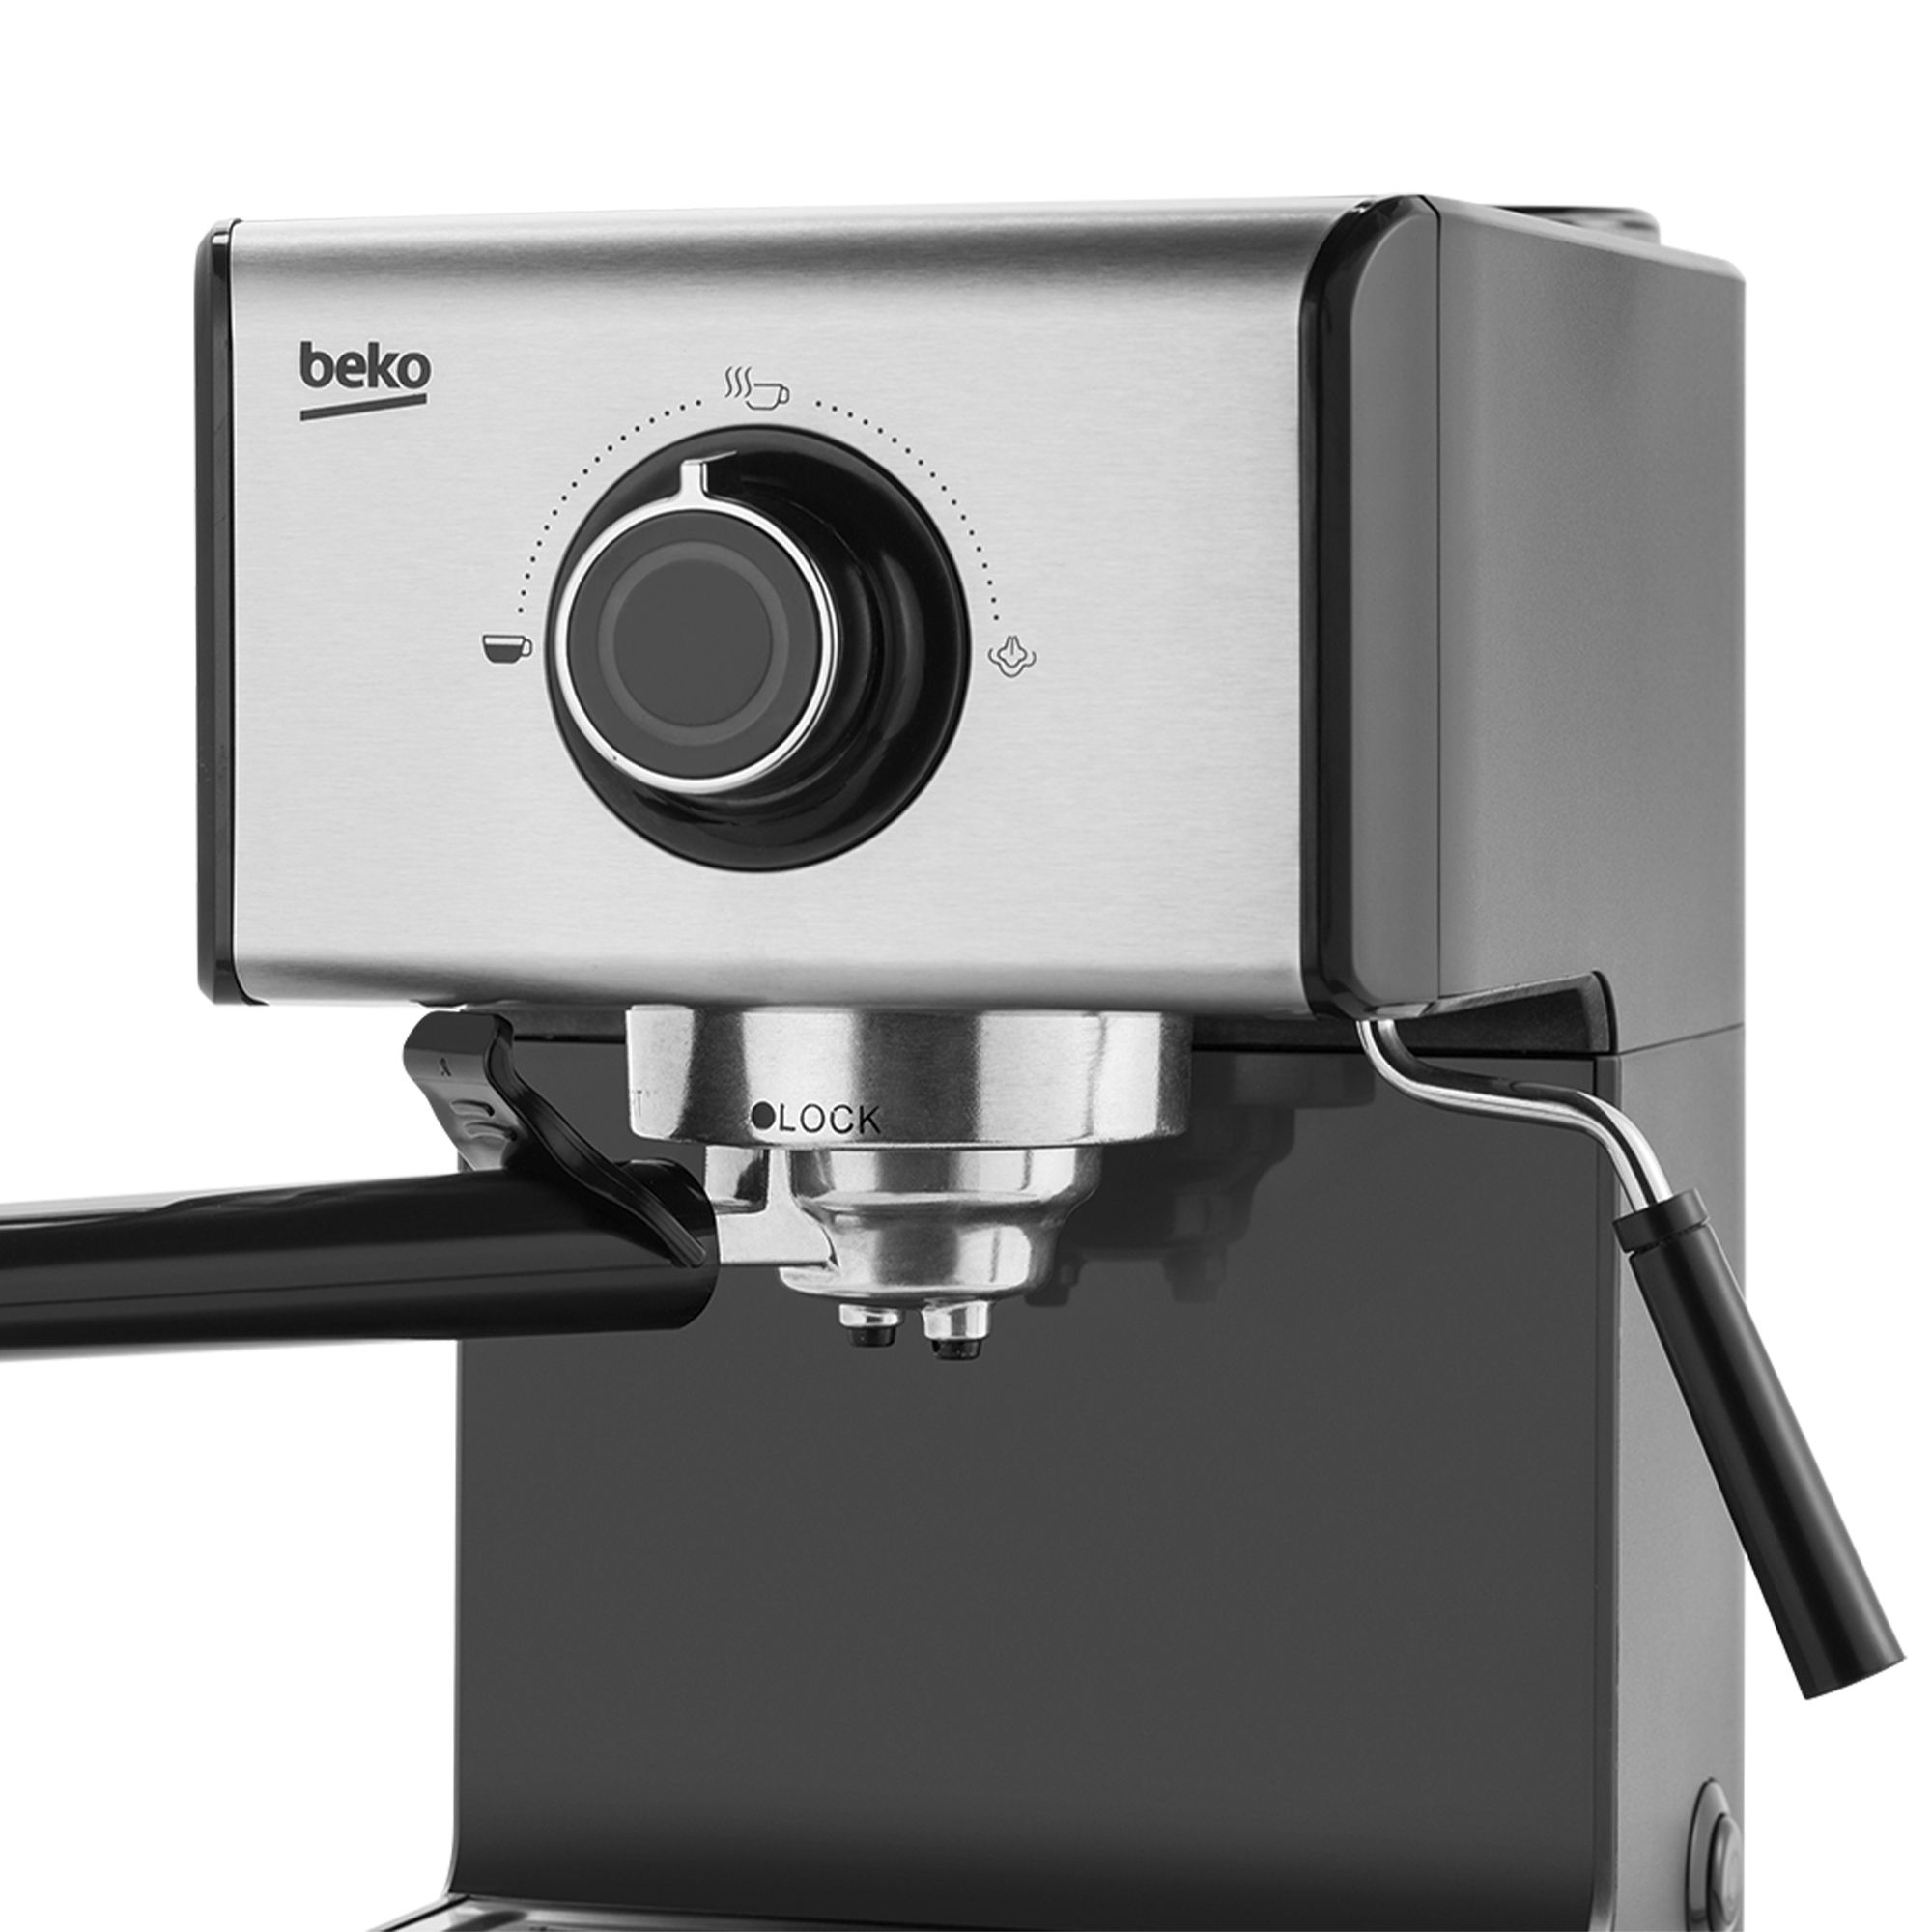 Beko Manual Pump Espresso CEP5152B Freestanding Coffee maker - Inox